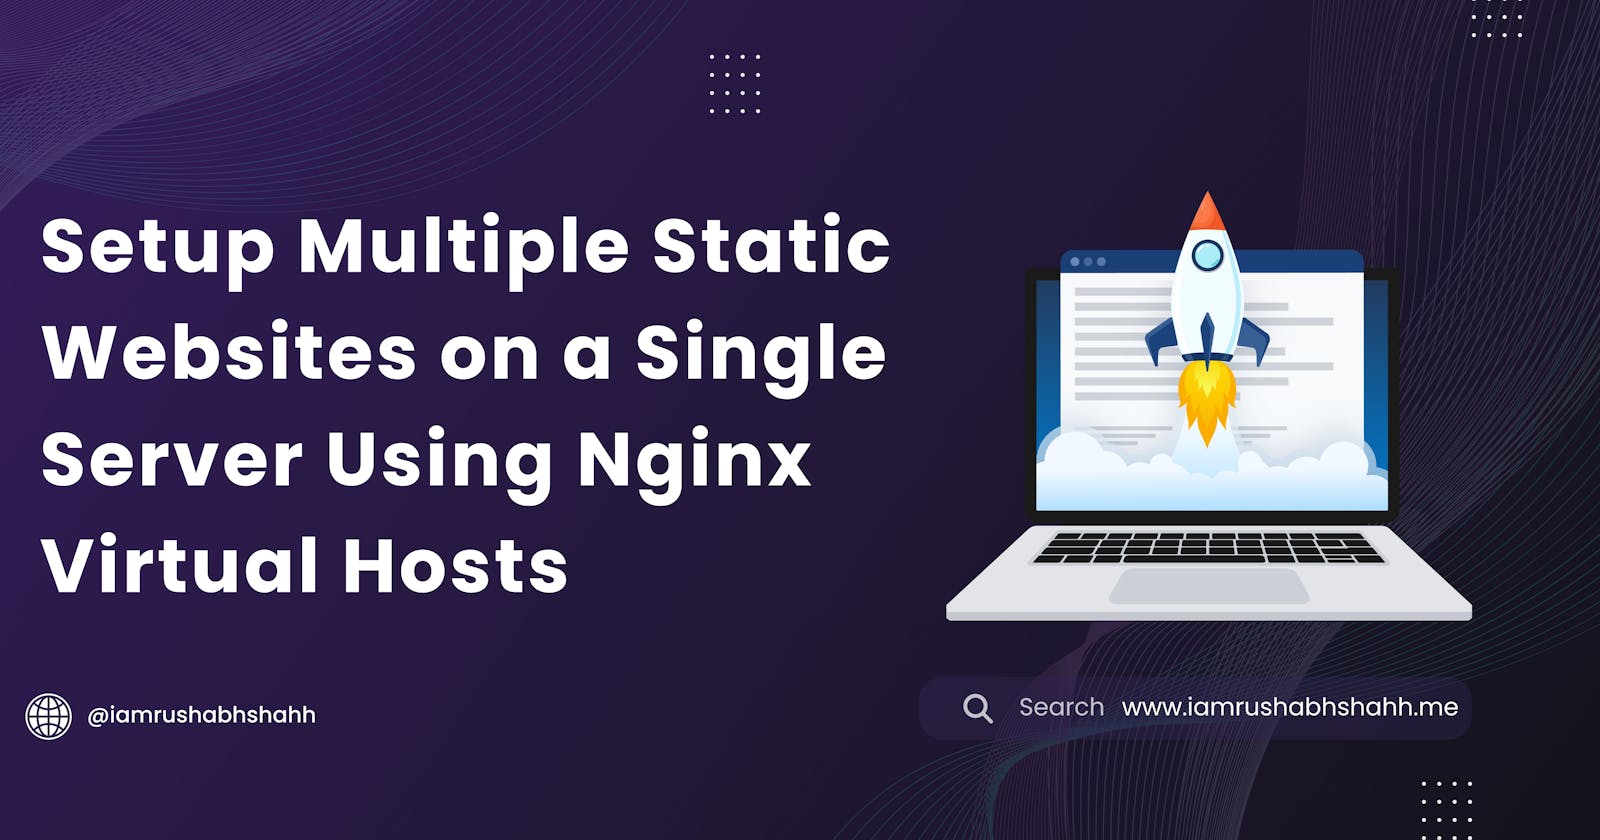 Setup Multiple Static Websites on a Single Server Using Nginx Virtual Hosts